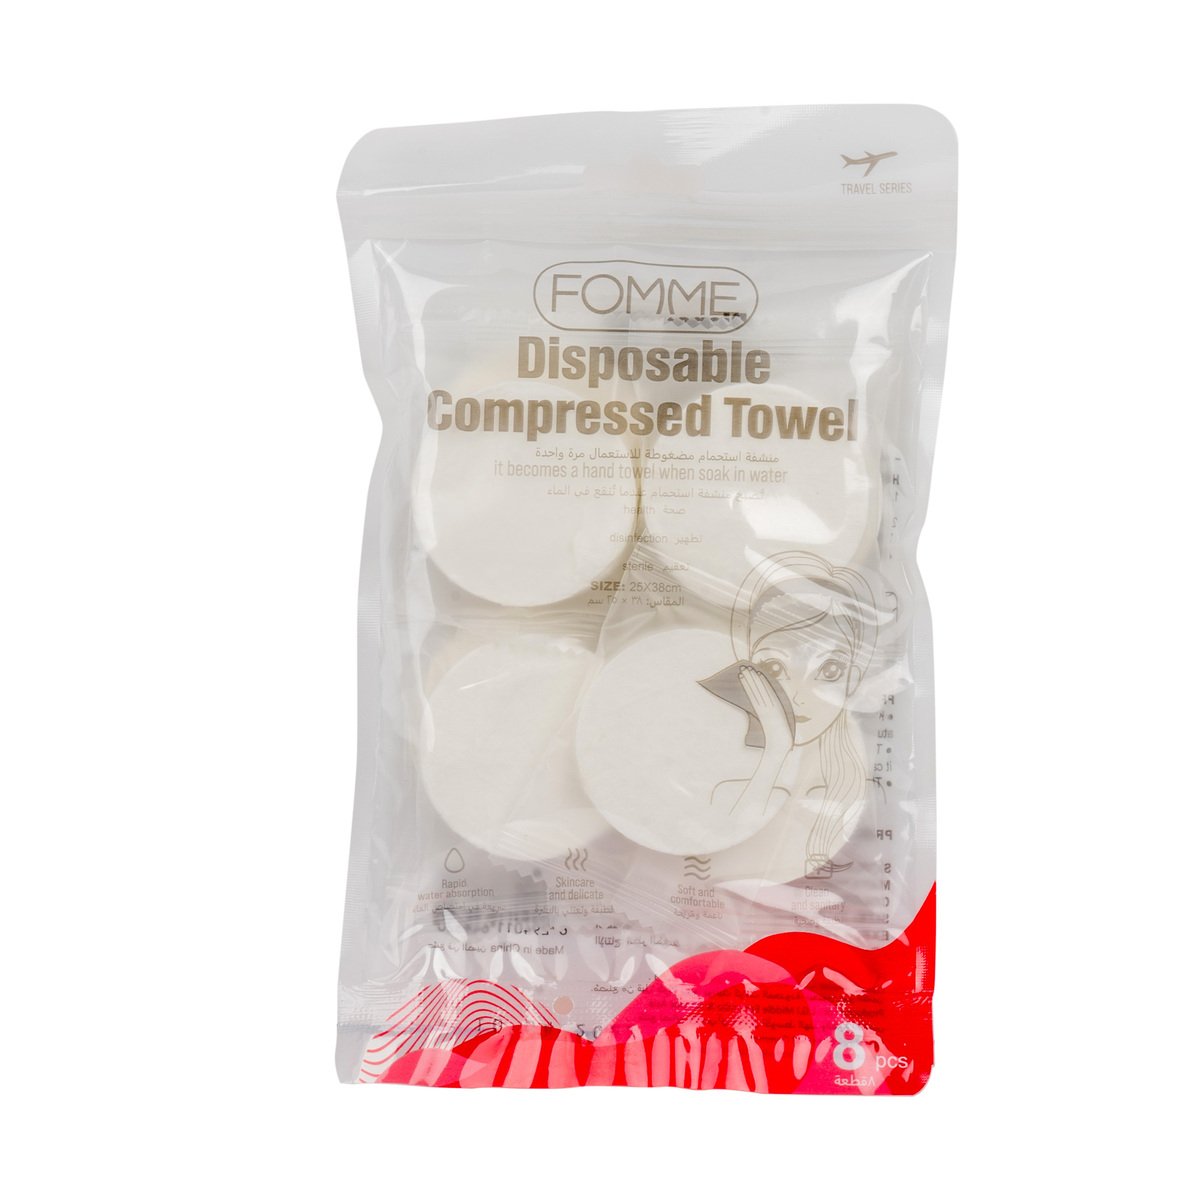 Fomme Disposable Compressed Towel 8pcs